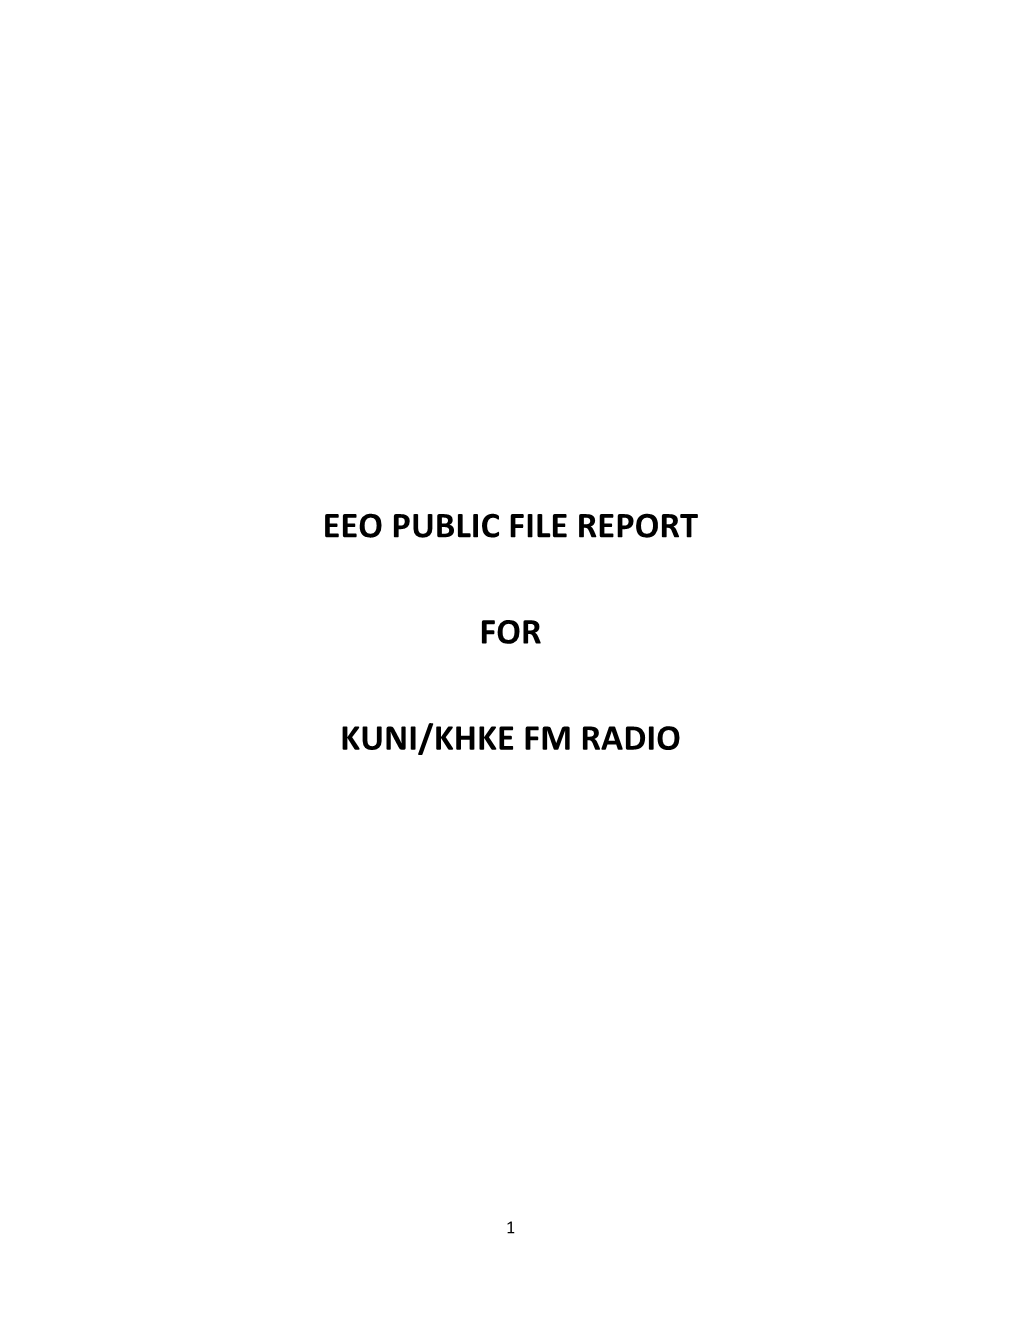 Eeo Public File Report for Kuni/Khke Fm Radio